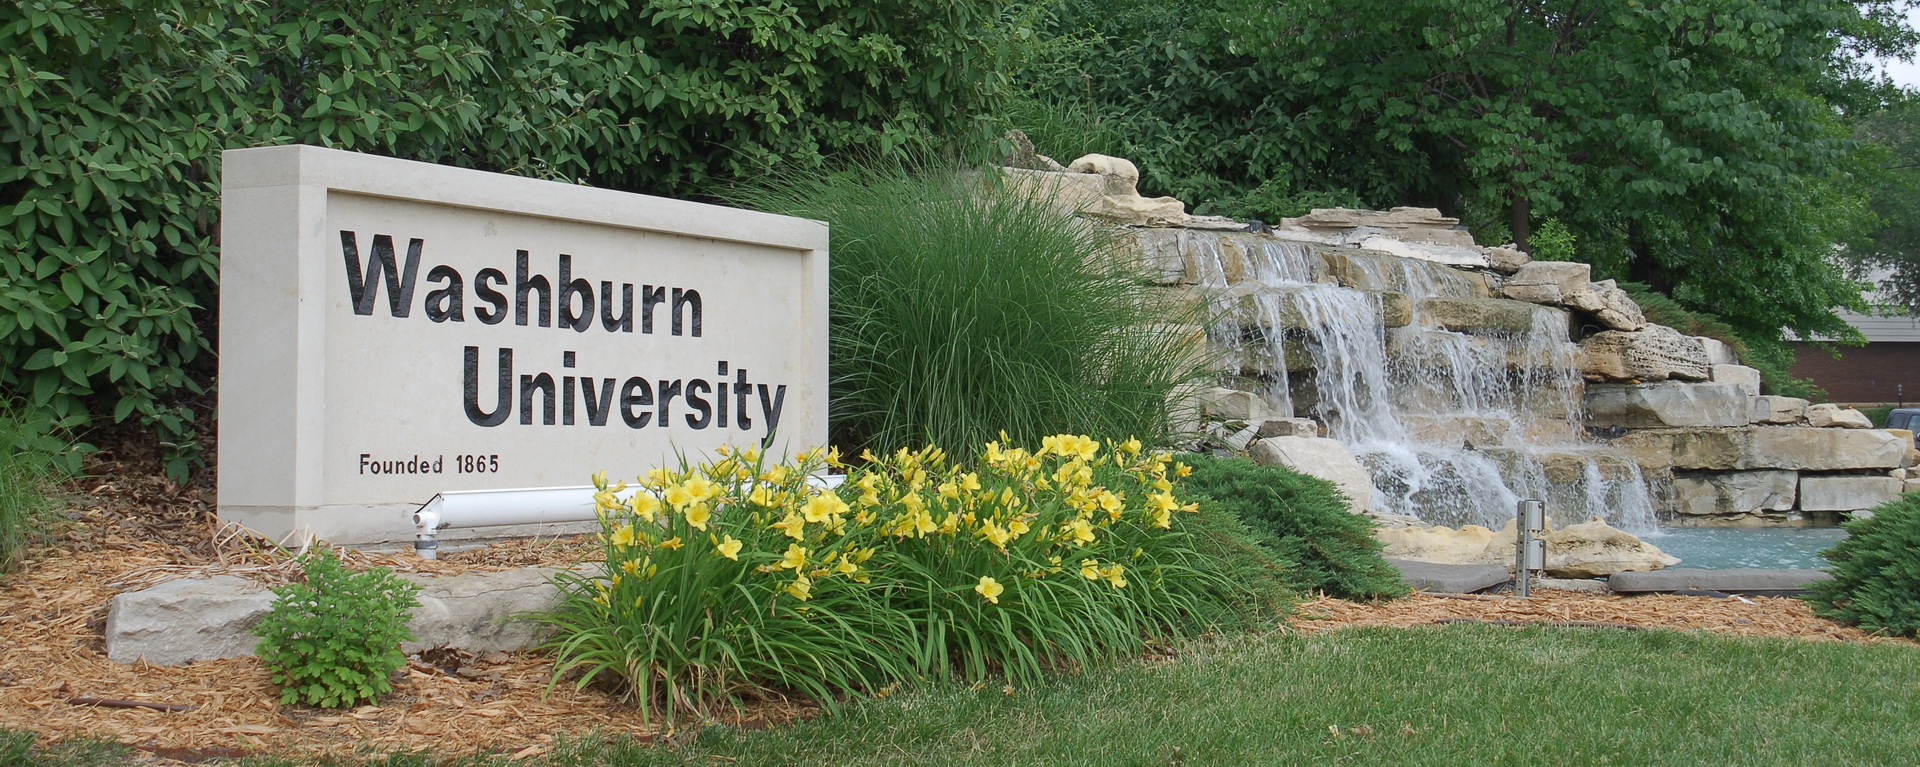 Washburn University sign and waterfall